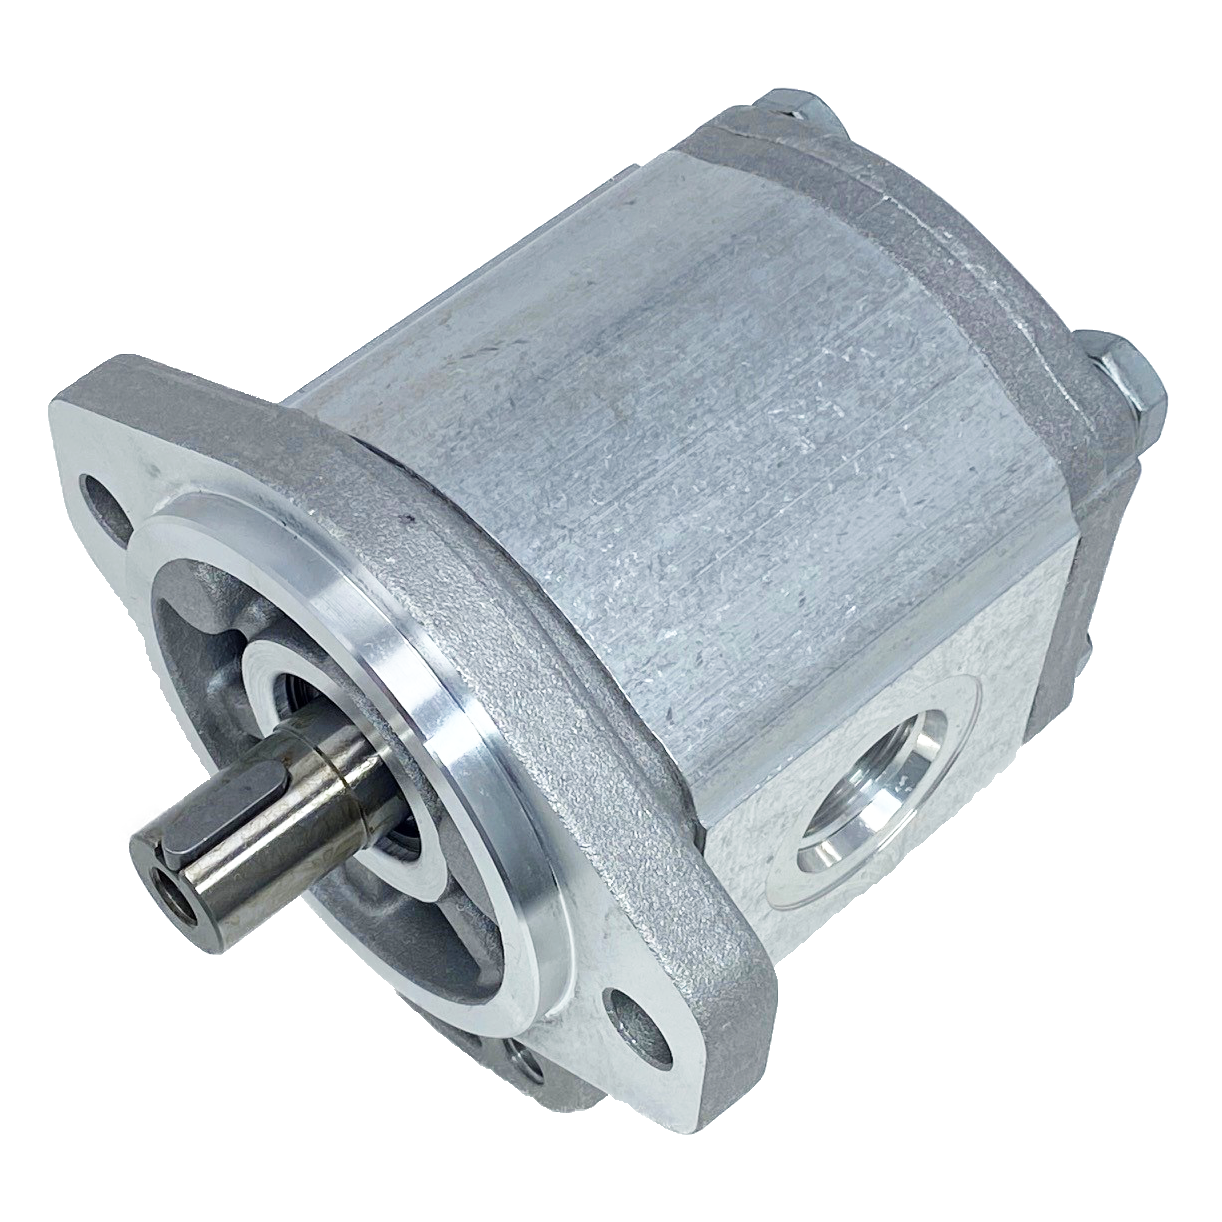 PLM20.16B0-50S1-LOC/OD-N-EL : Casappa Polaris Gear Motor, 16.85cc, 3625psi Rated, 3000RPM, Reversible Interior Drain, 3/4" Bore x 3/16" Key Shaft, SAE A 2-Bolt Flange, 0.625 (5/8") #10 SAE Inlet, 0.75 (3/4") #12 SAE Outlet, Aluminum Body & Flange